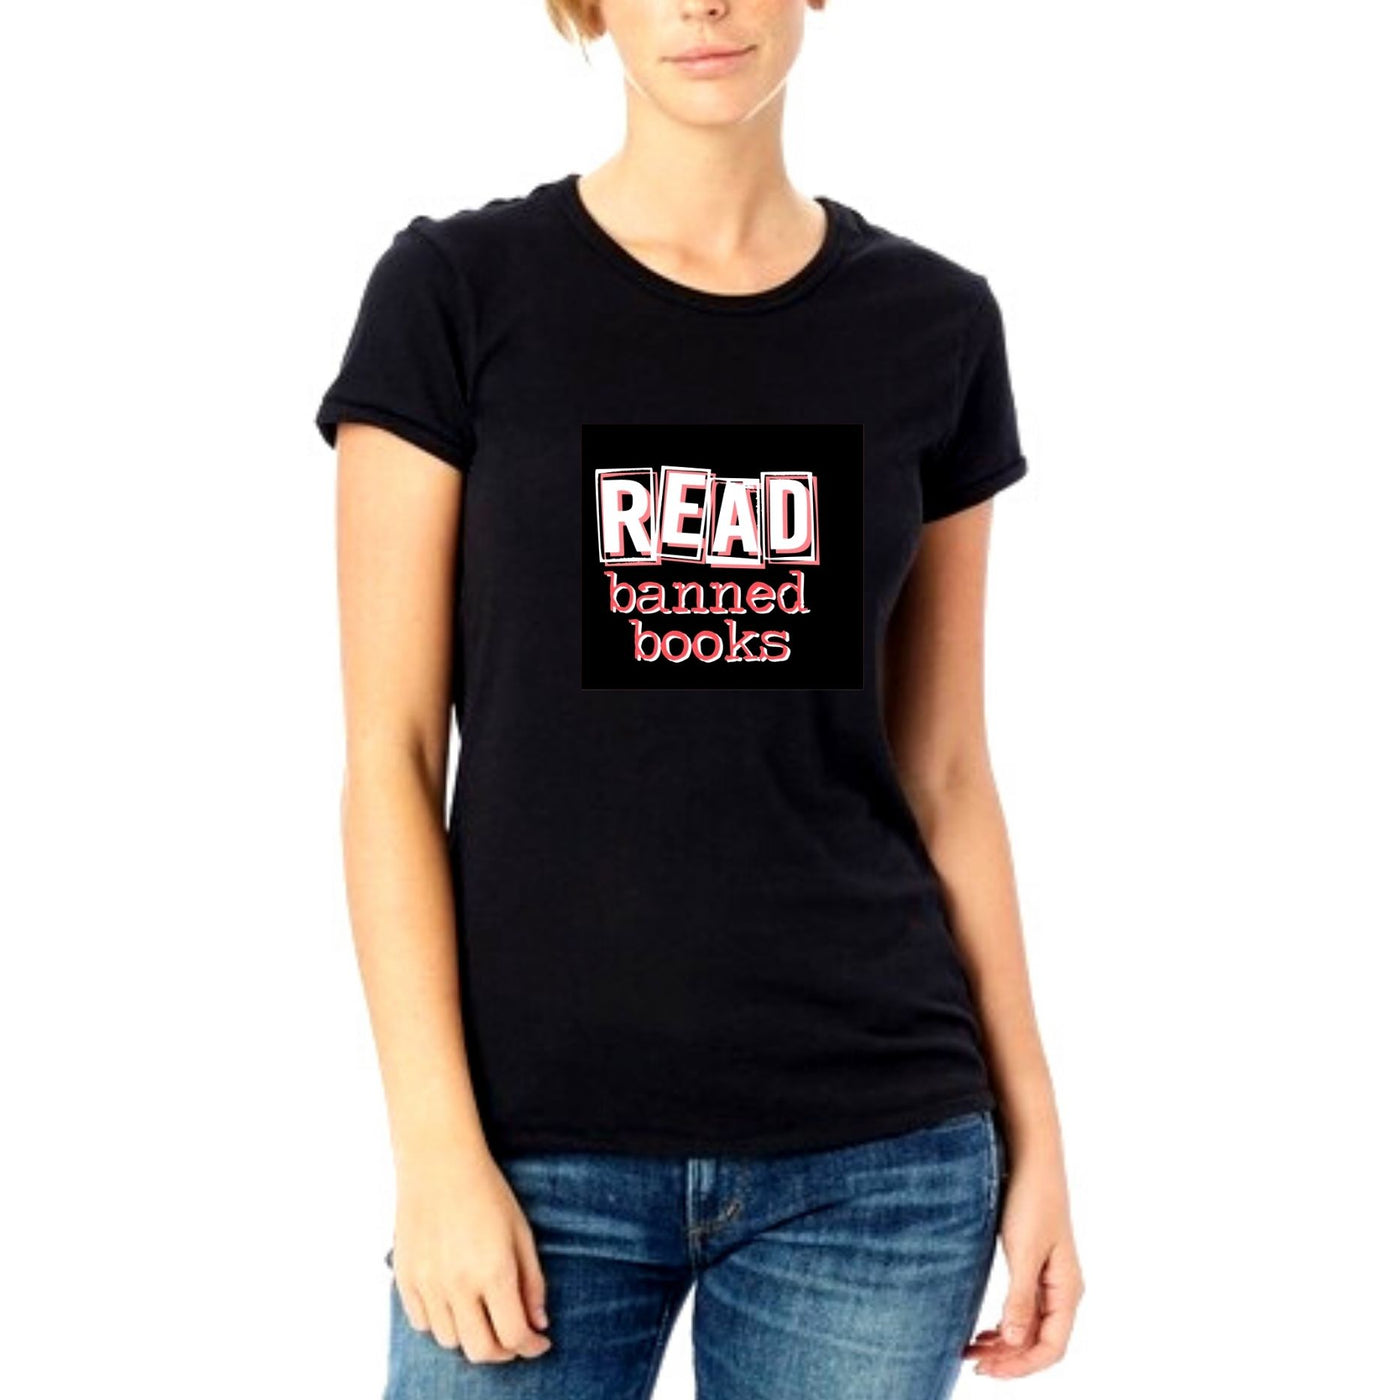 read banned books - women men unisex tee shirt